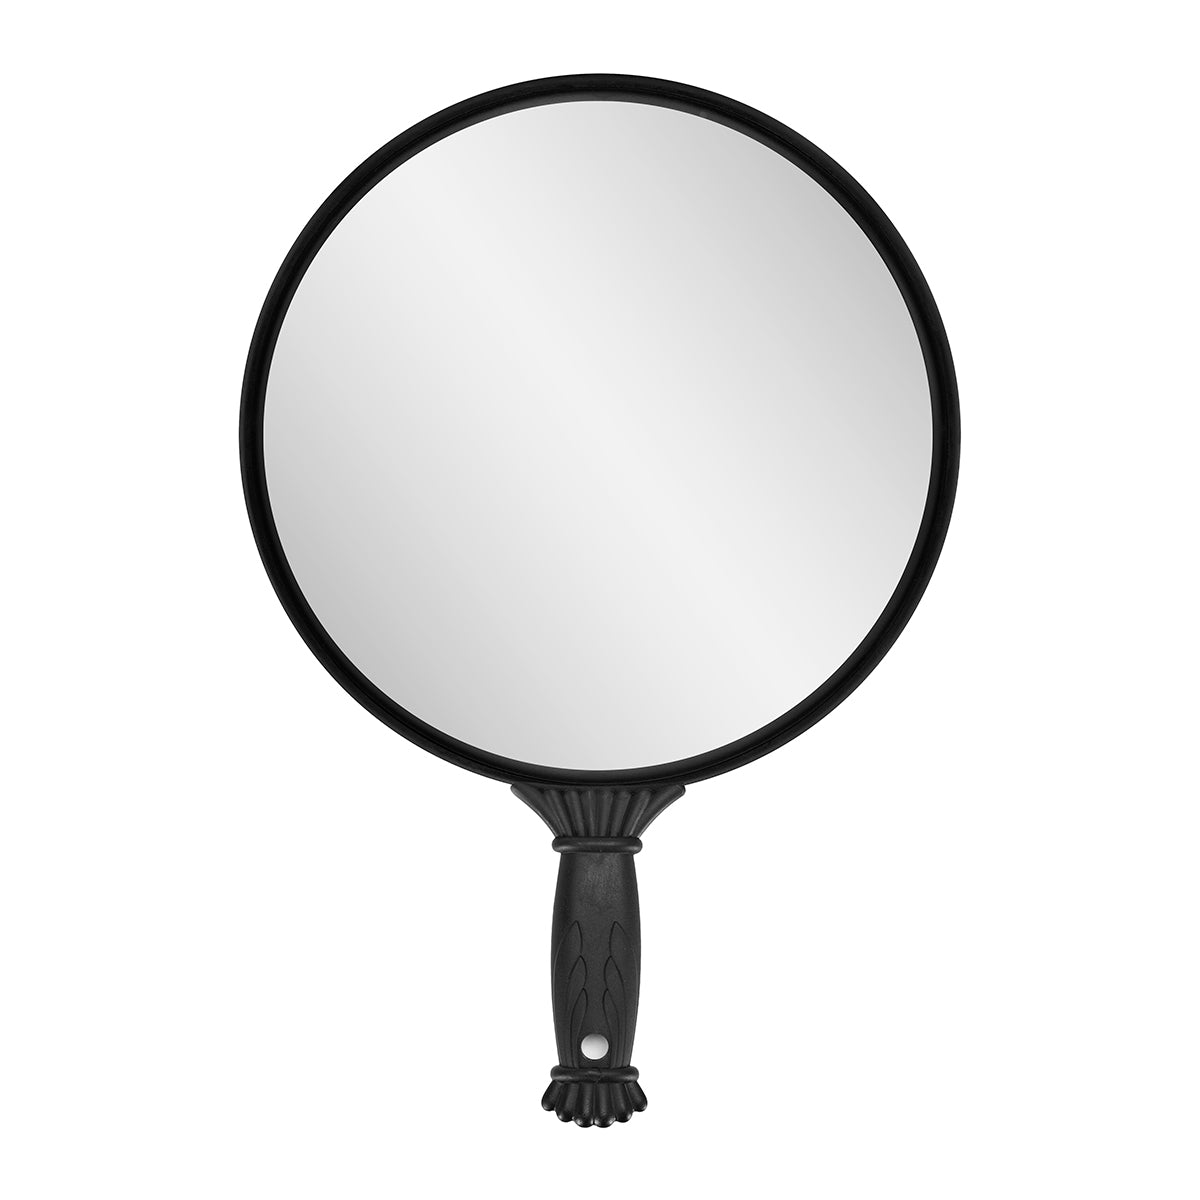 ACTIVESHOP Round barber mirror with handle q-35